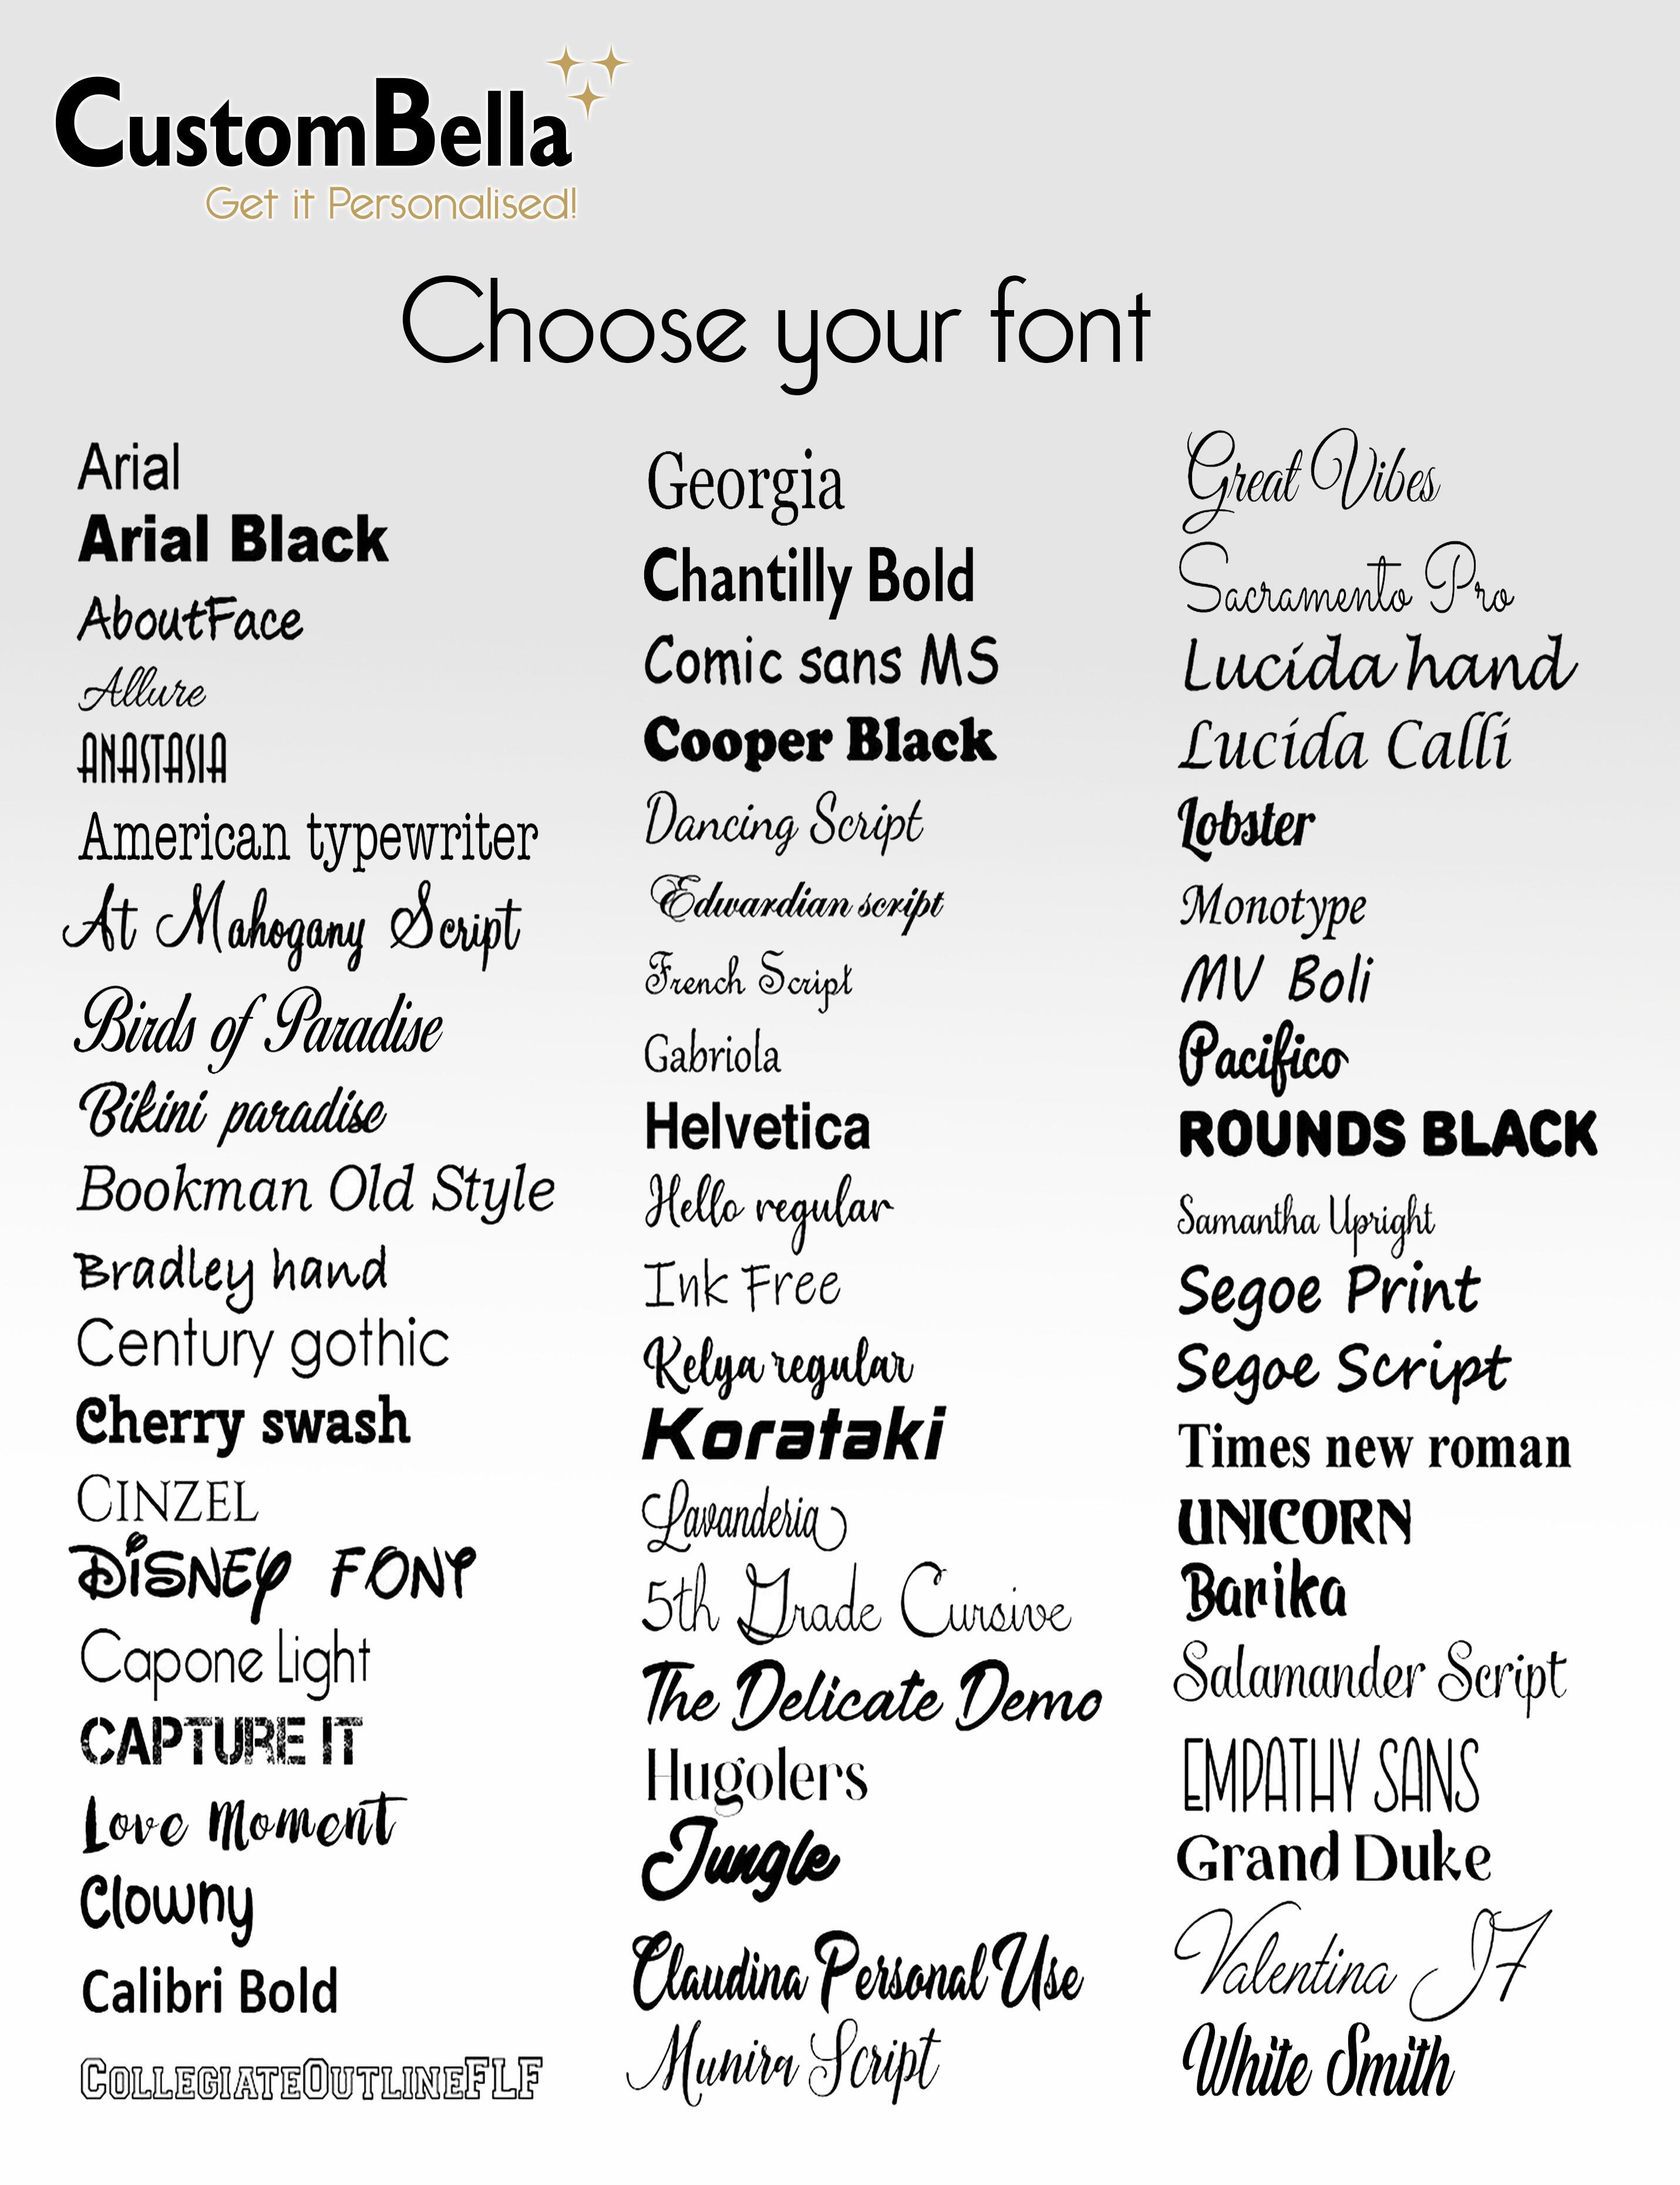 Custombella fonts to select